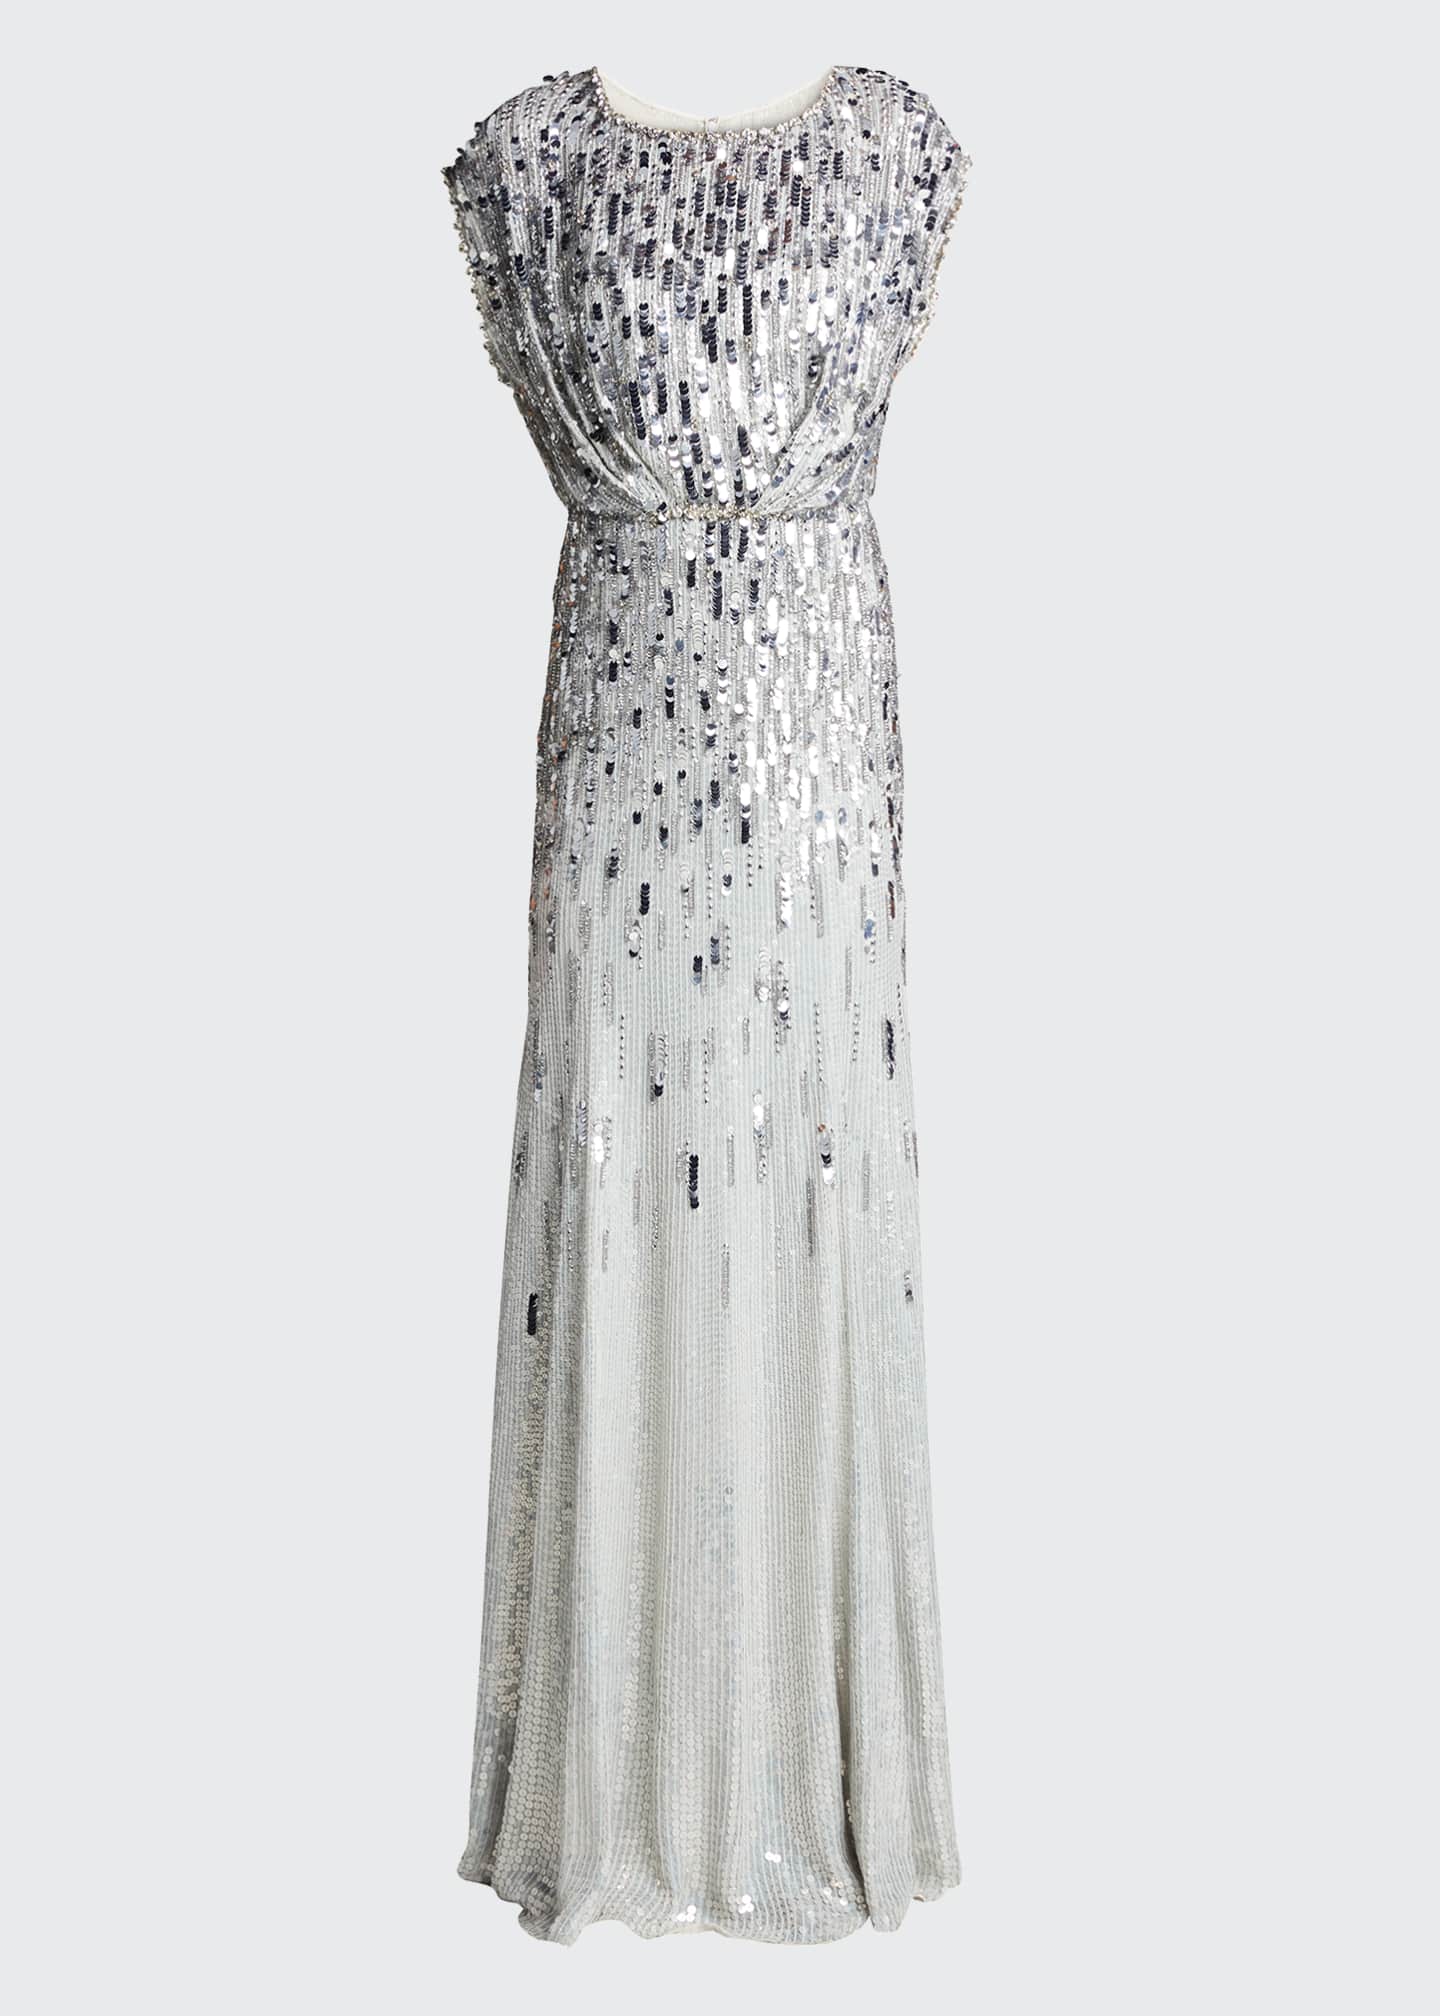 Jenny Packham Cap-Sleeve Embellished Gown - Bergdorf Goodman